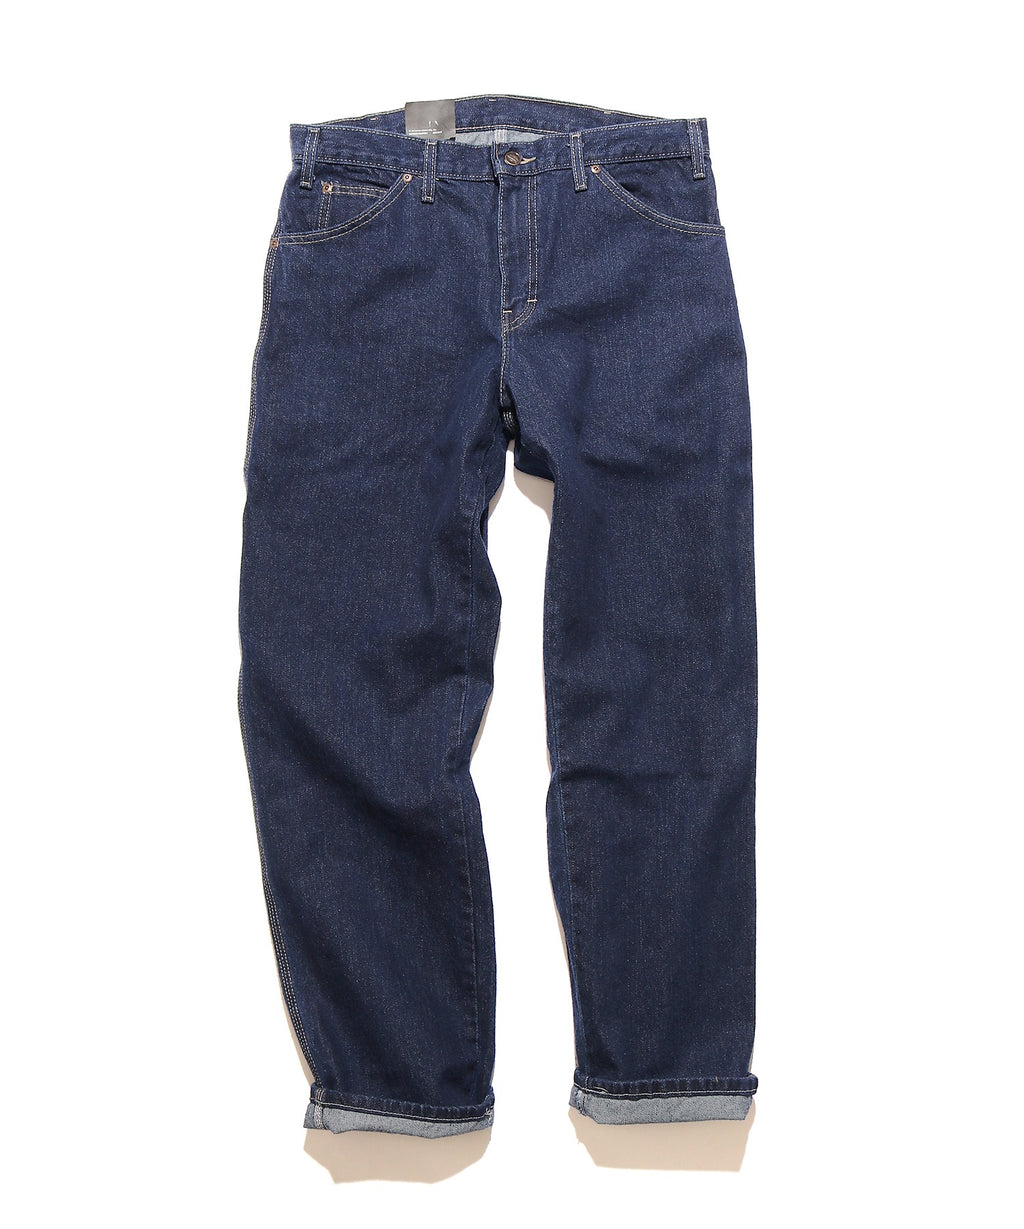 Dickies/ディッキーズ 1993 Carpenter Denim Jeans カーペンターパンツ